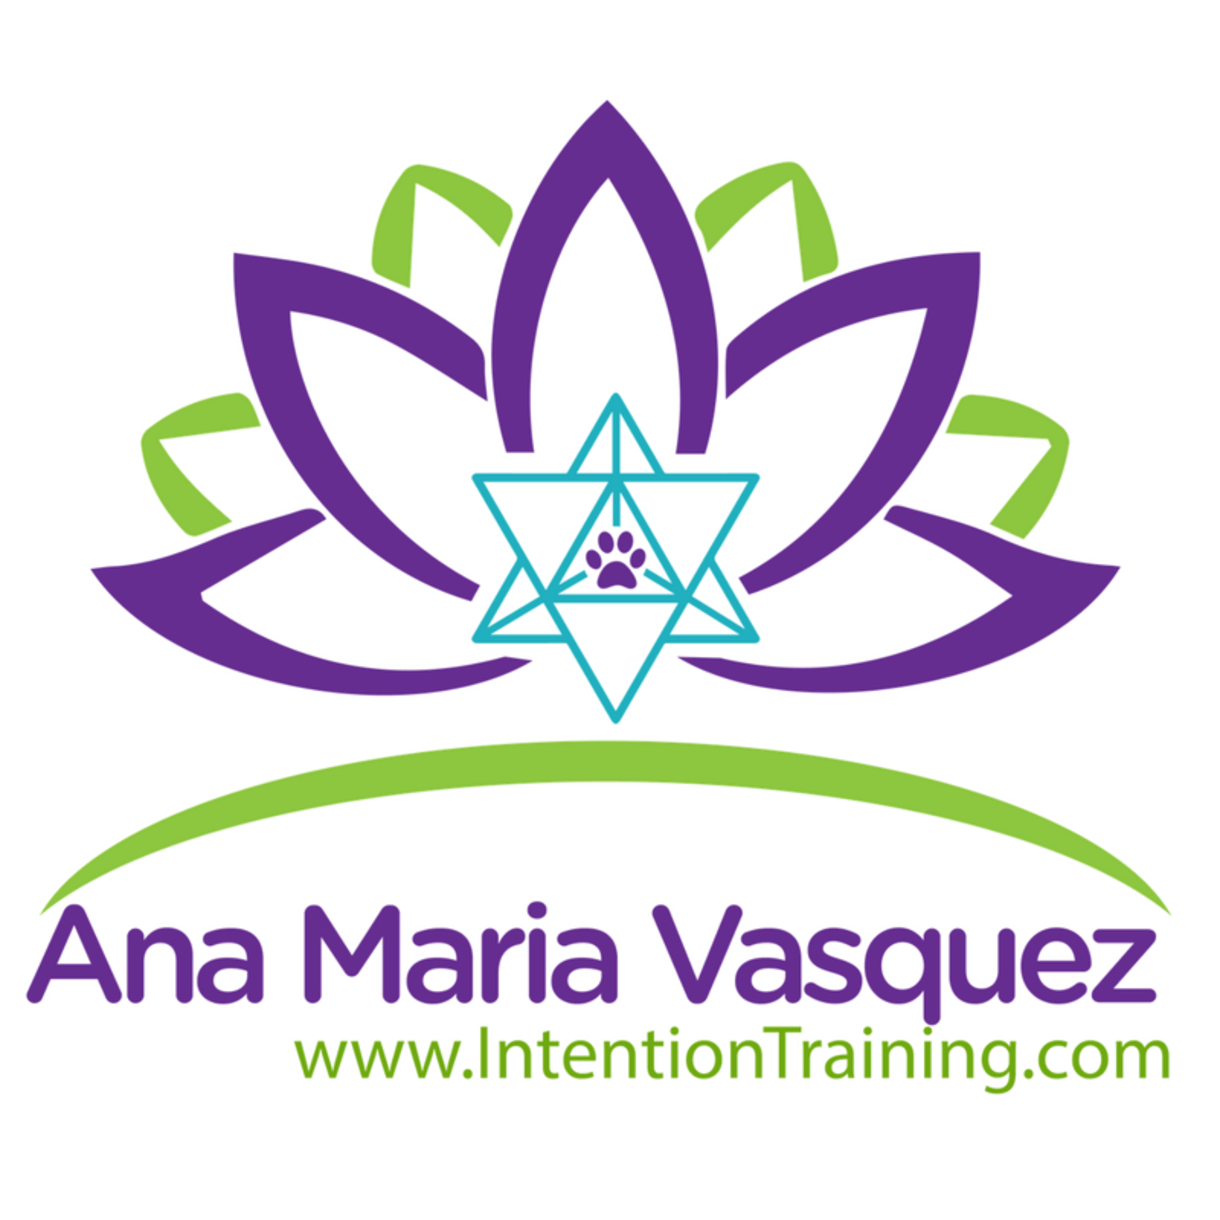 Ana Maria Vasquez, Multi-Sensory Animal & Nature Intuitive logo